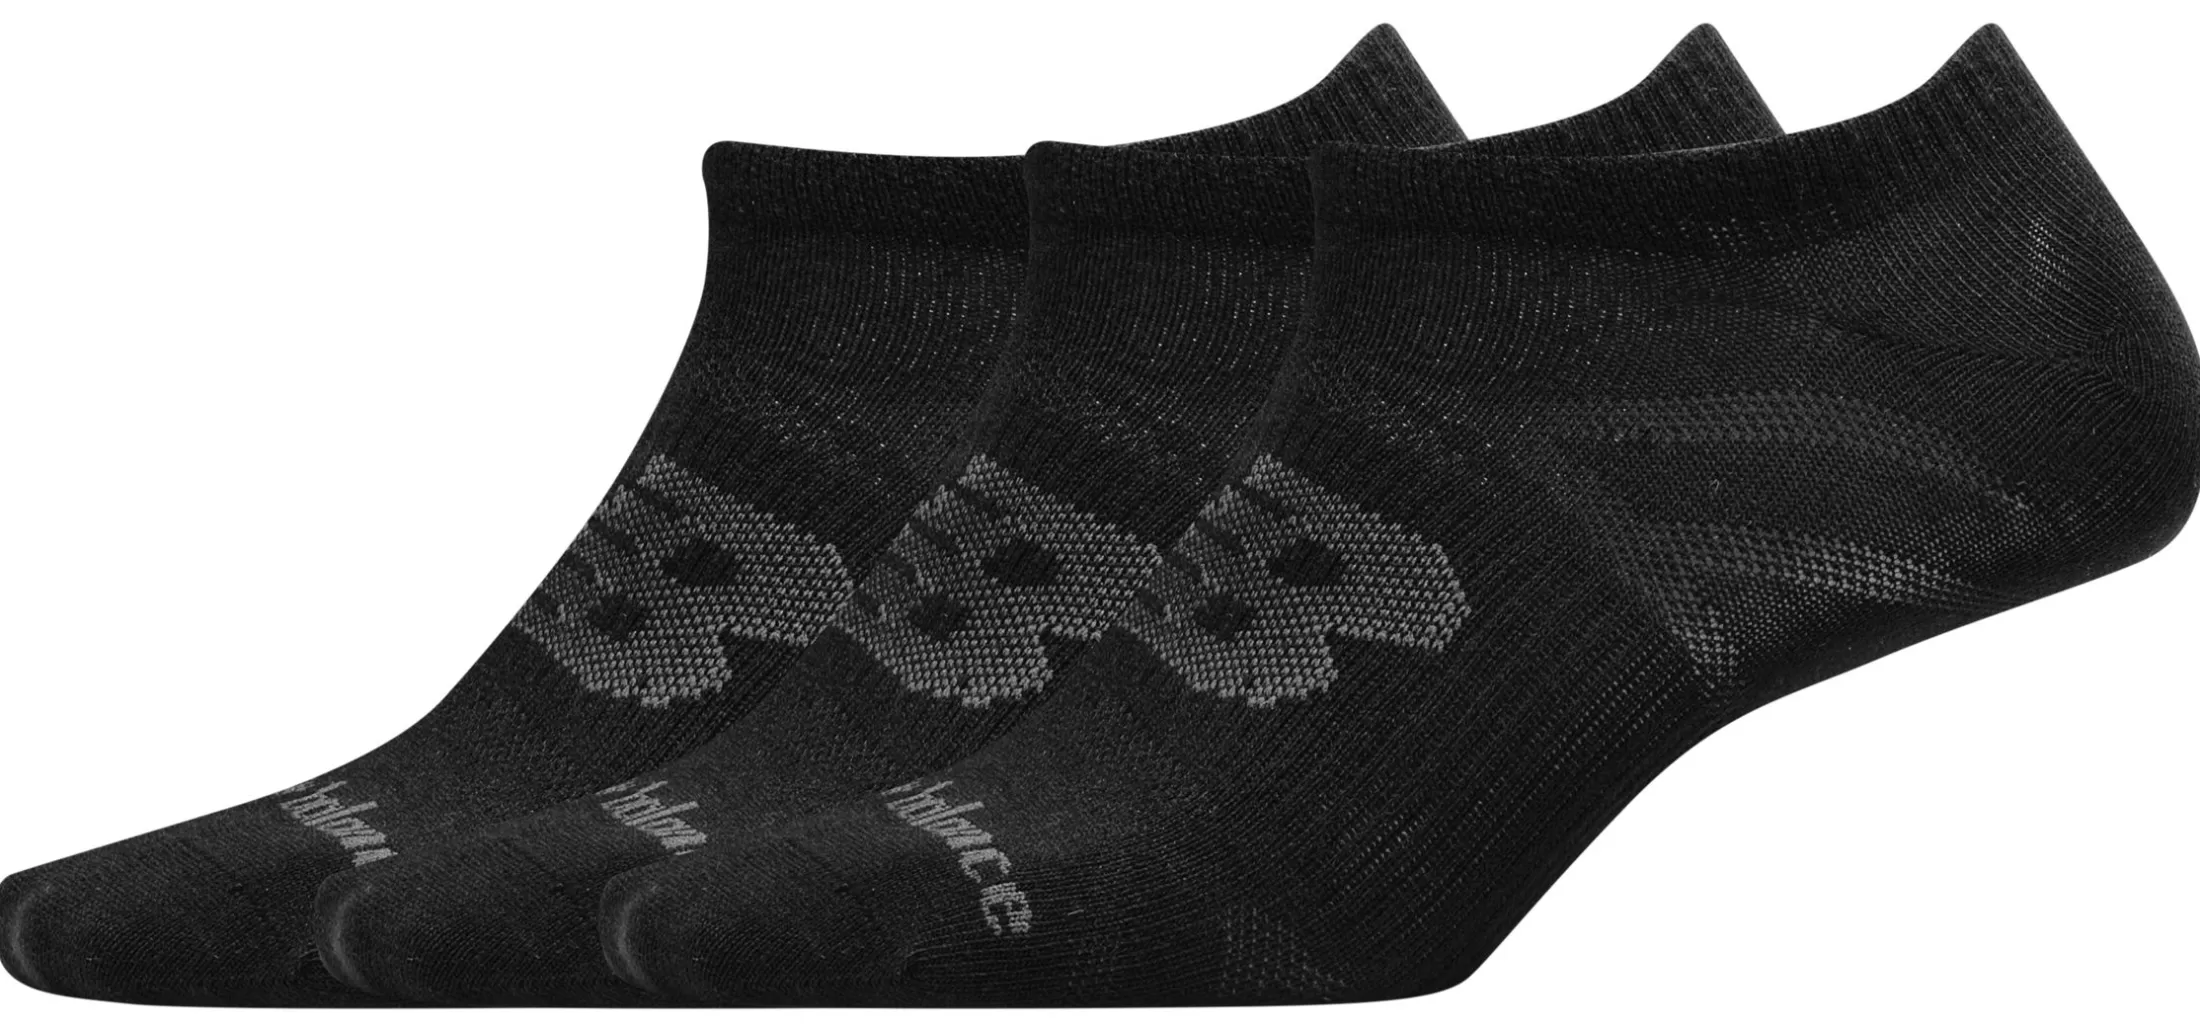 Discount Unisex Flat Knit No Show Socks 3 Pack MULHER/HOMEN Socks | All Accessories